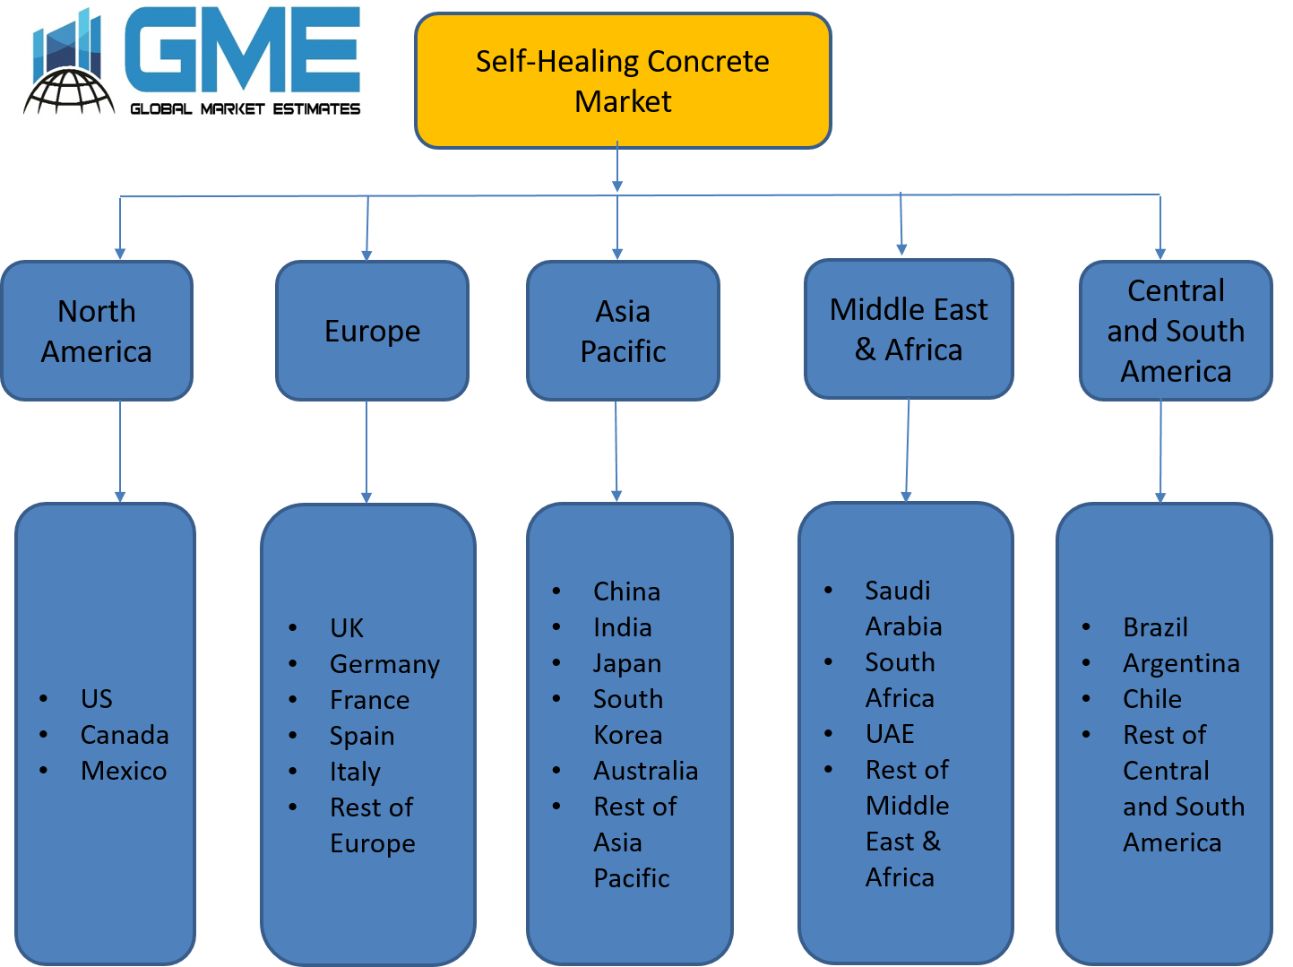 Self-Healing Concrete Market - Regional Analysis